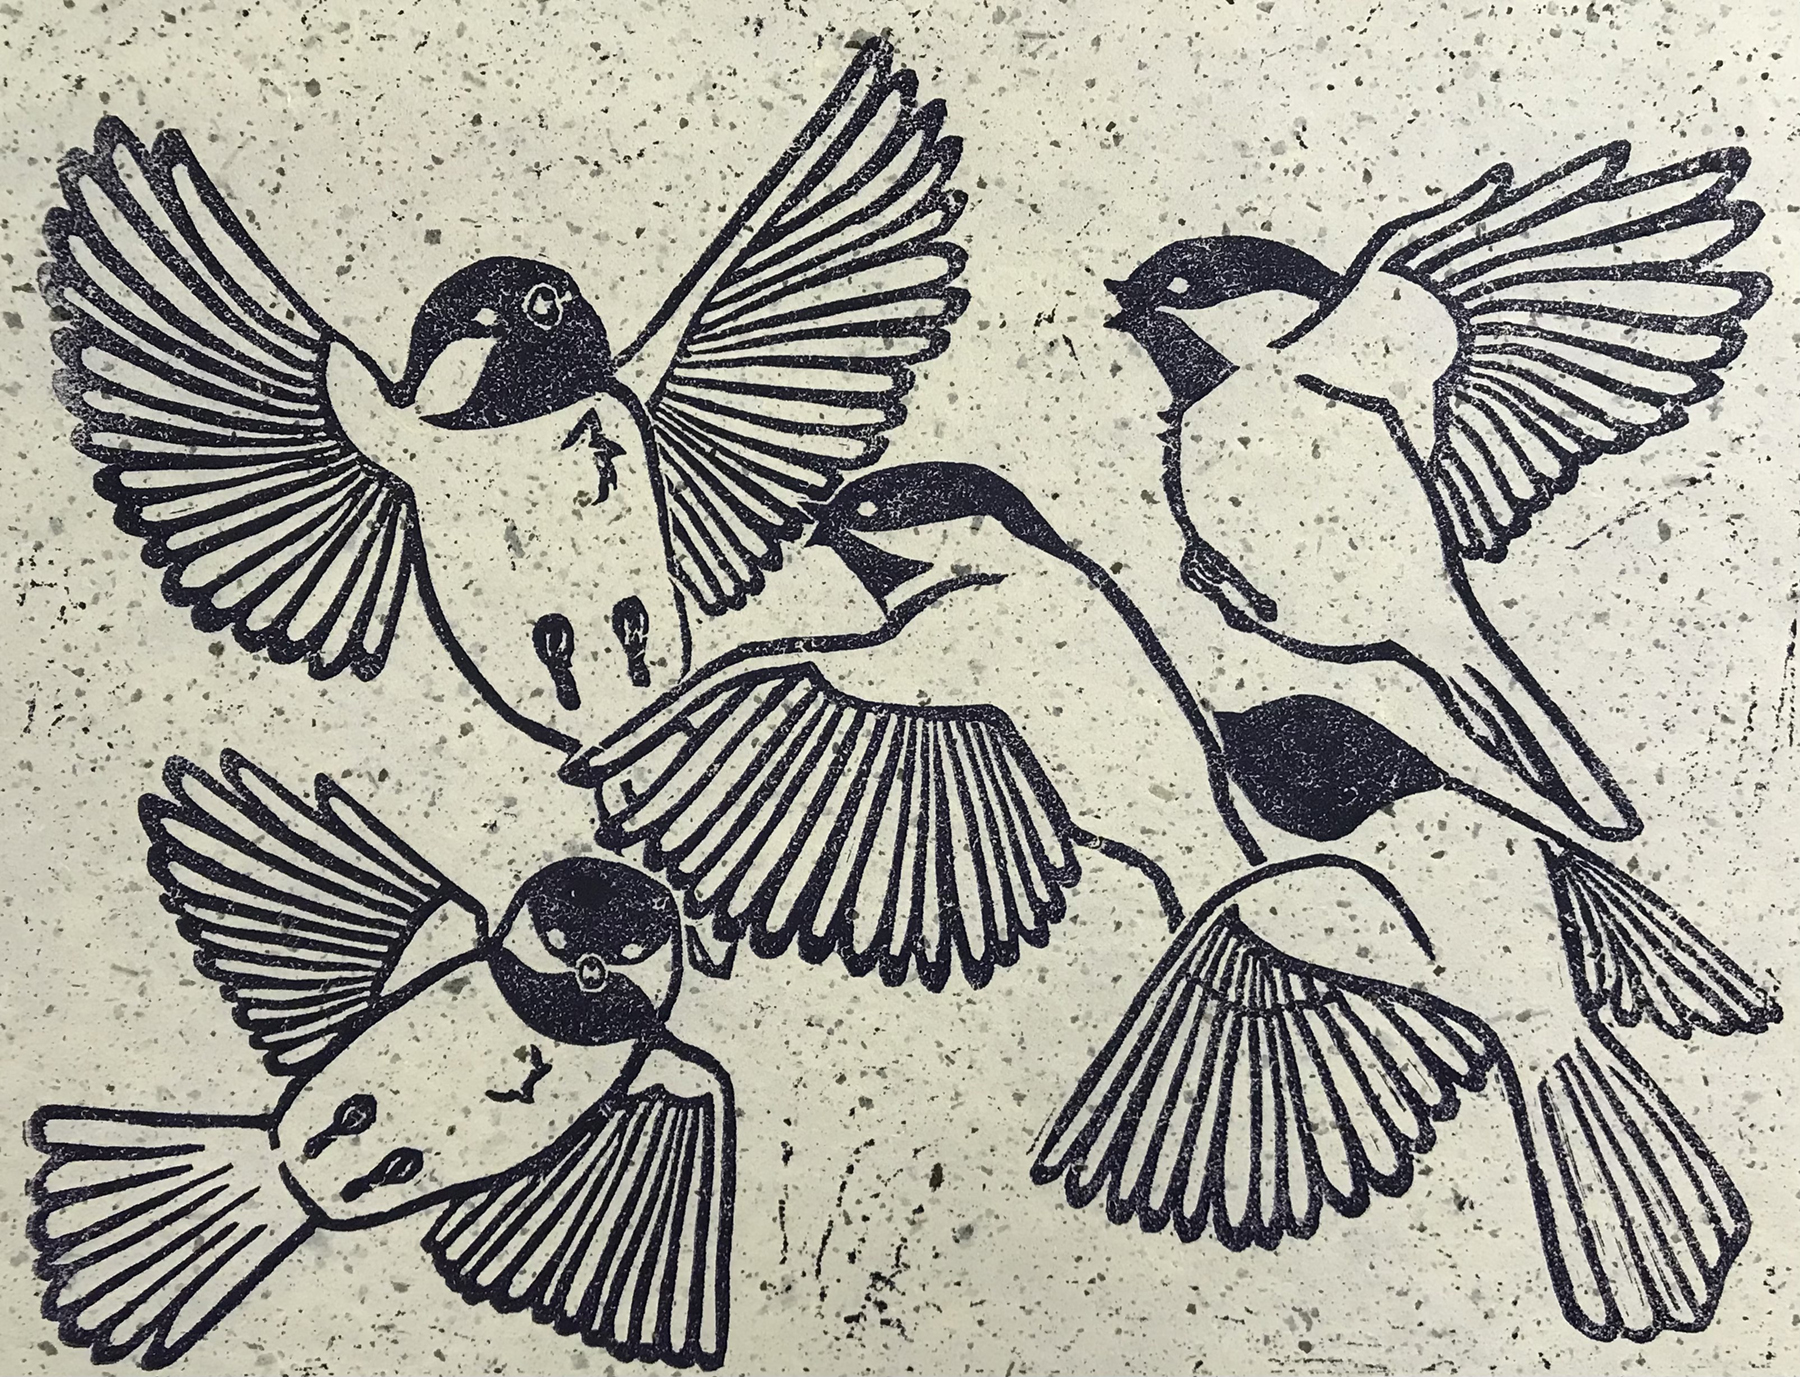 Five birds in flight, courtesy of the artist